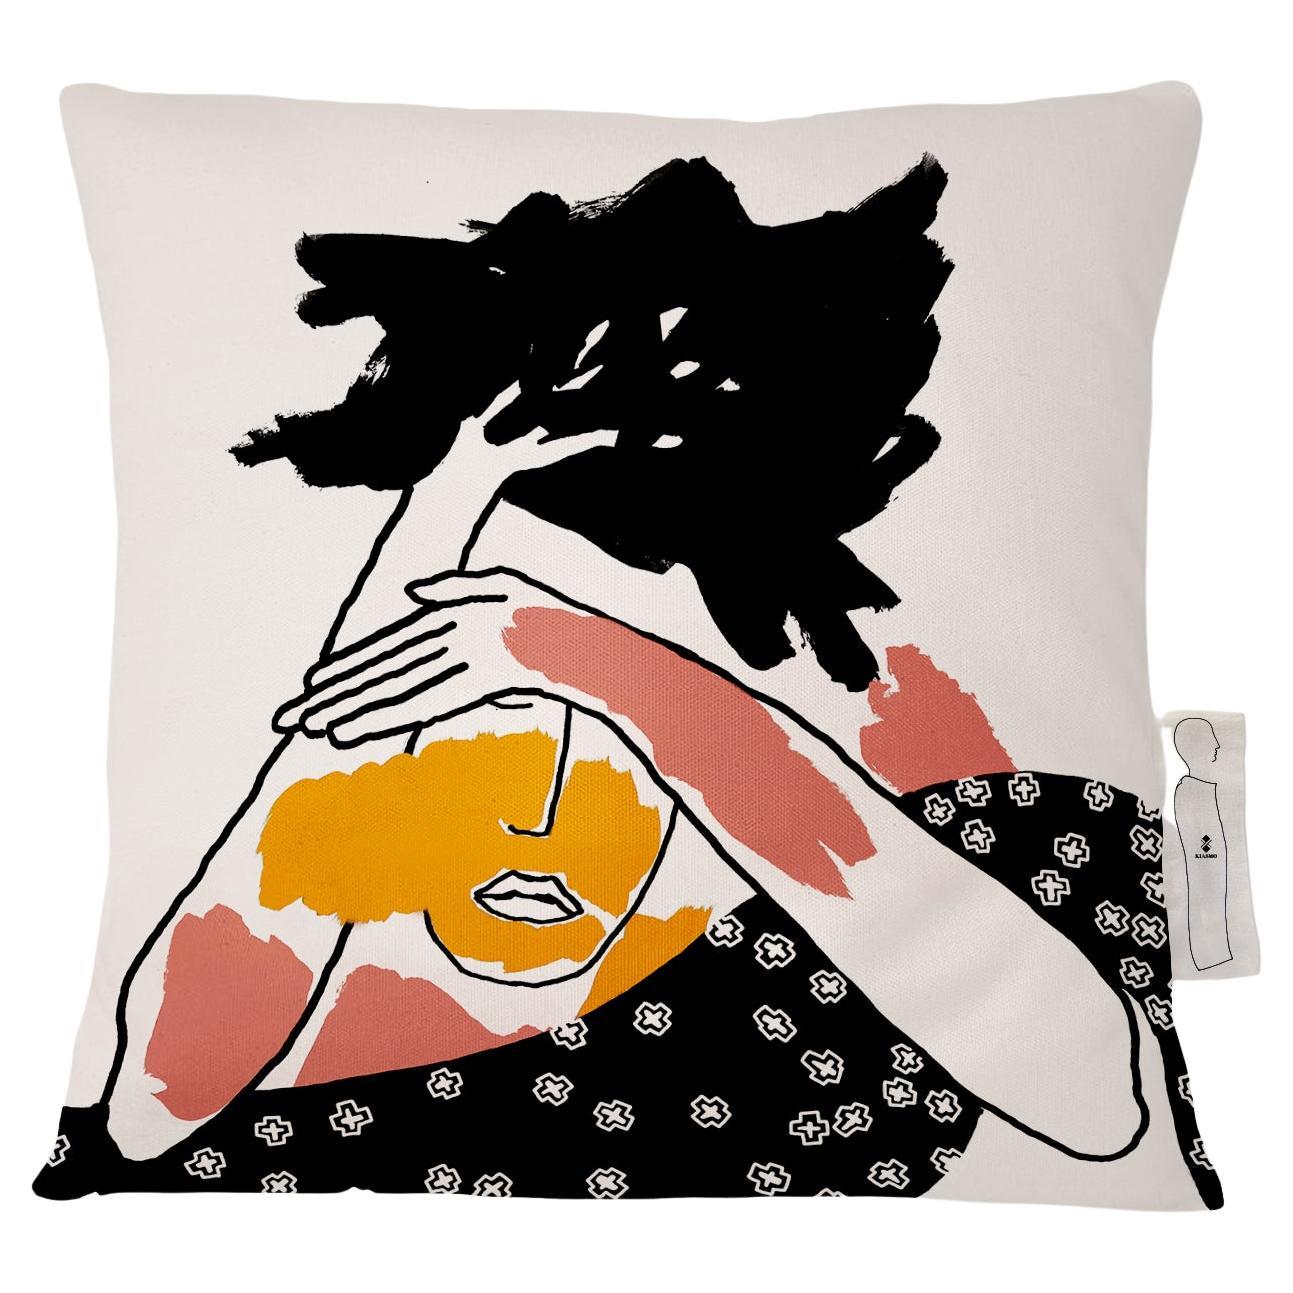 21st Century Pillows Kiasmo "Nostalghia I" Designer Vincenzo D'alba